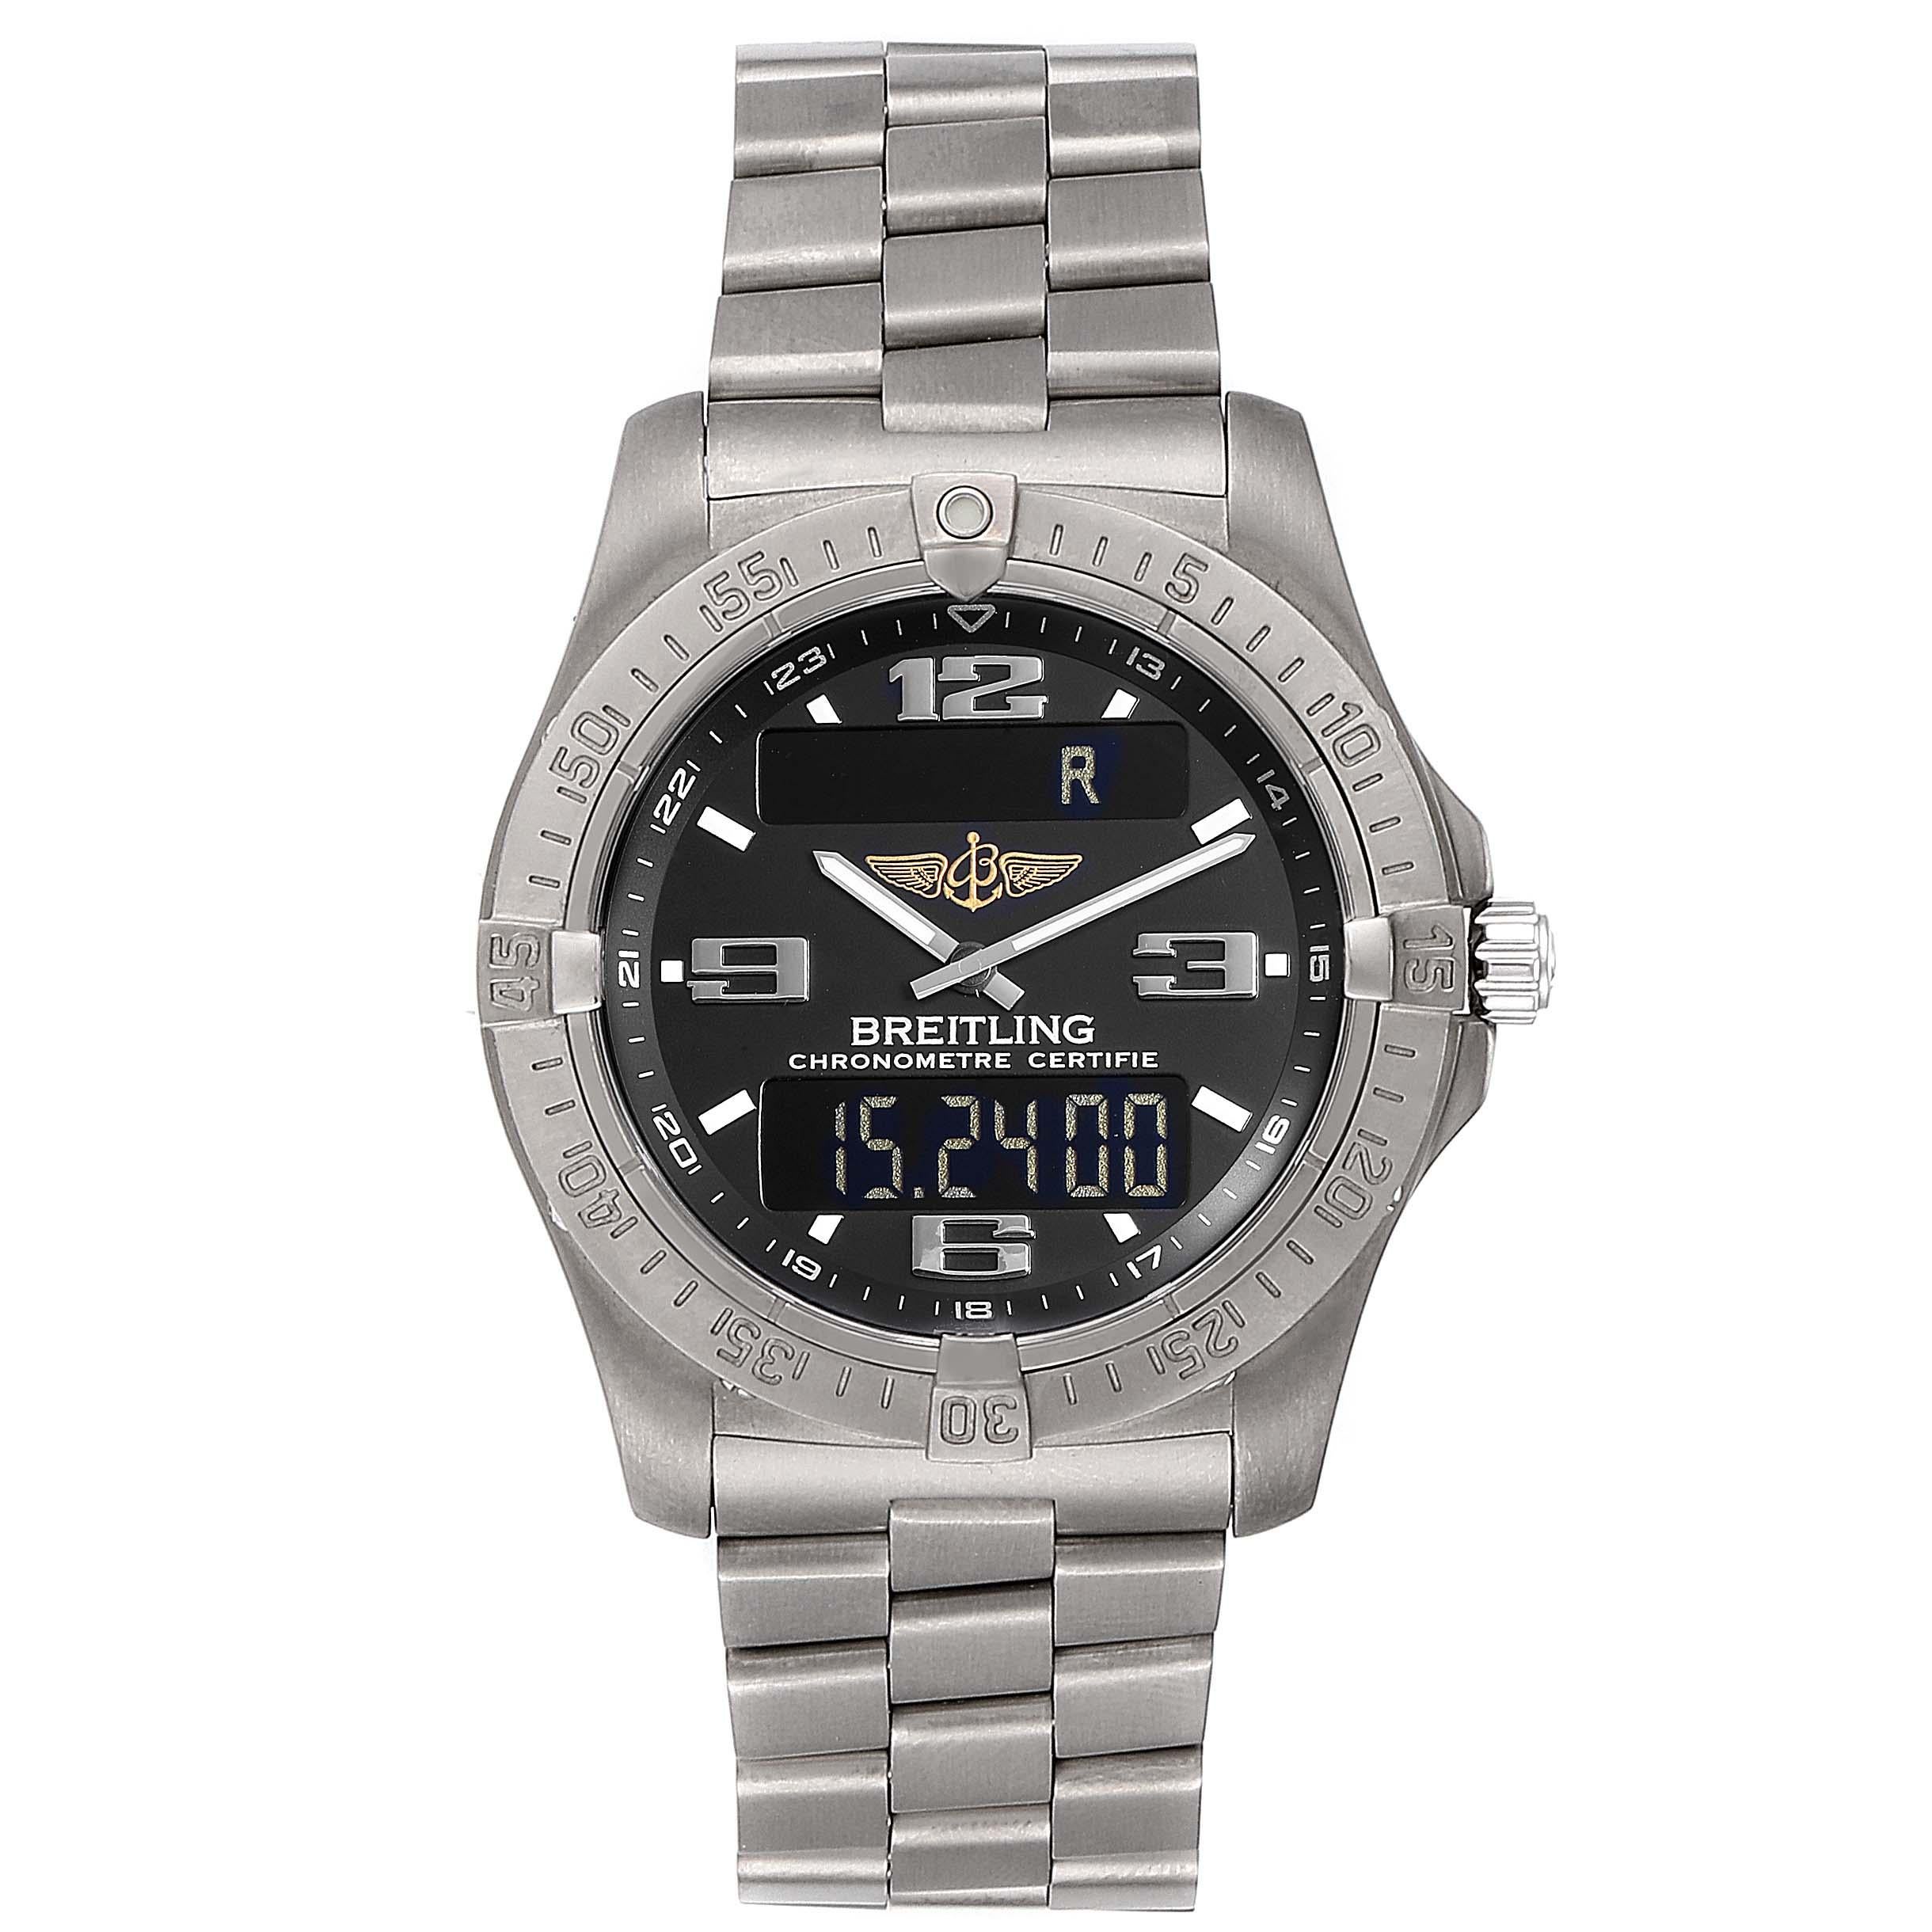 Breitling Aerospace Avantage Titanium Perpetual Alarm Watch E79362 Box Papers. Quartz movement. Perpetual calendar, chronograph, alarm, date, day, GMT, second time zone, hour, minute, second,